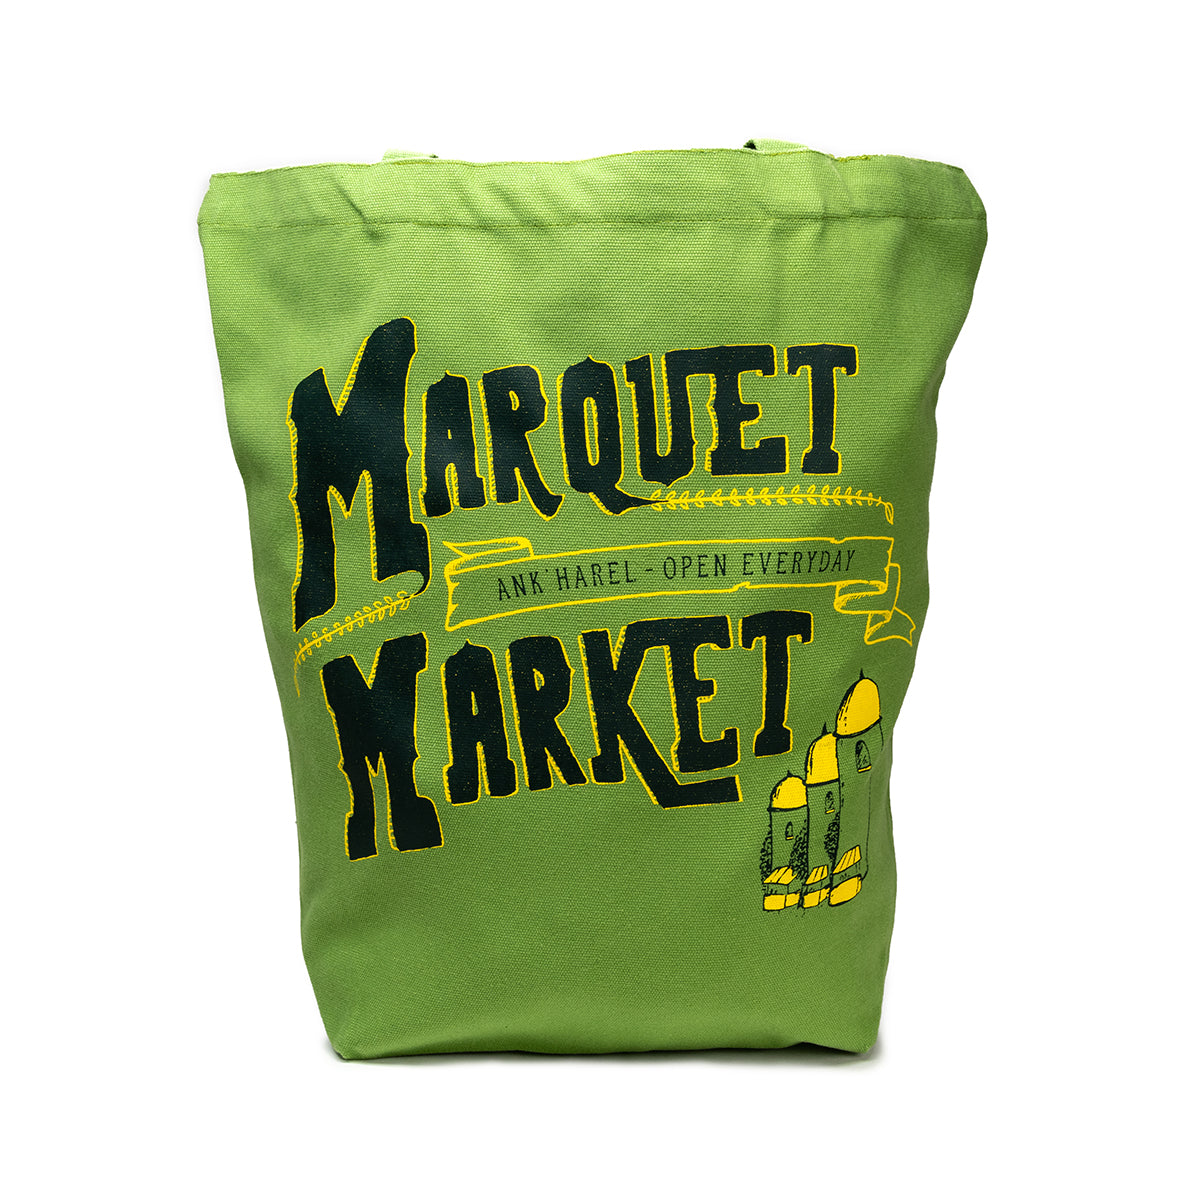 Marquet Market Tote Bag - Green - Critical Role